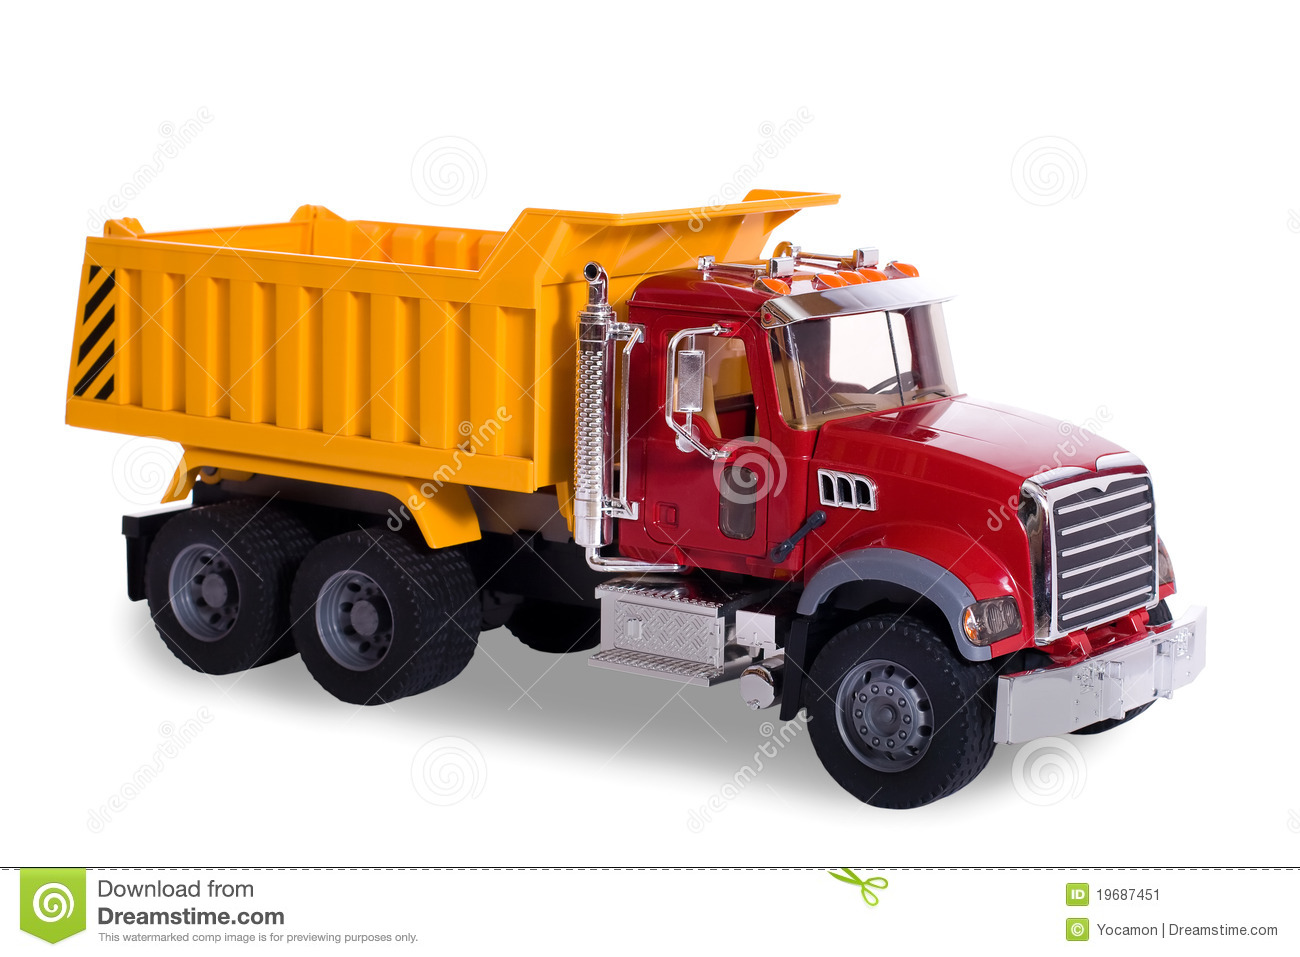 Dump Truck Toy Stock Image   Image  19687451